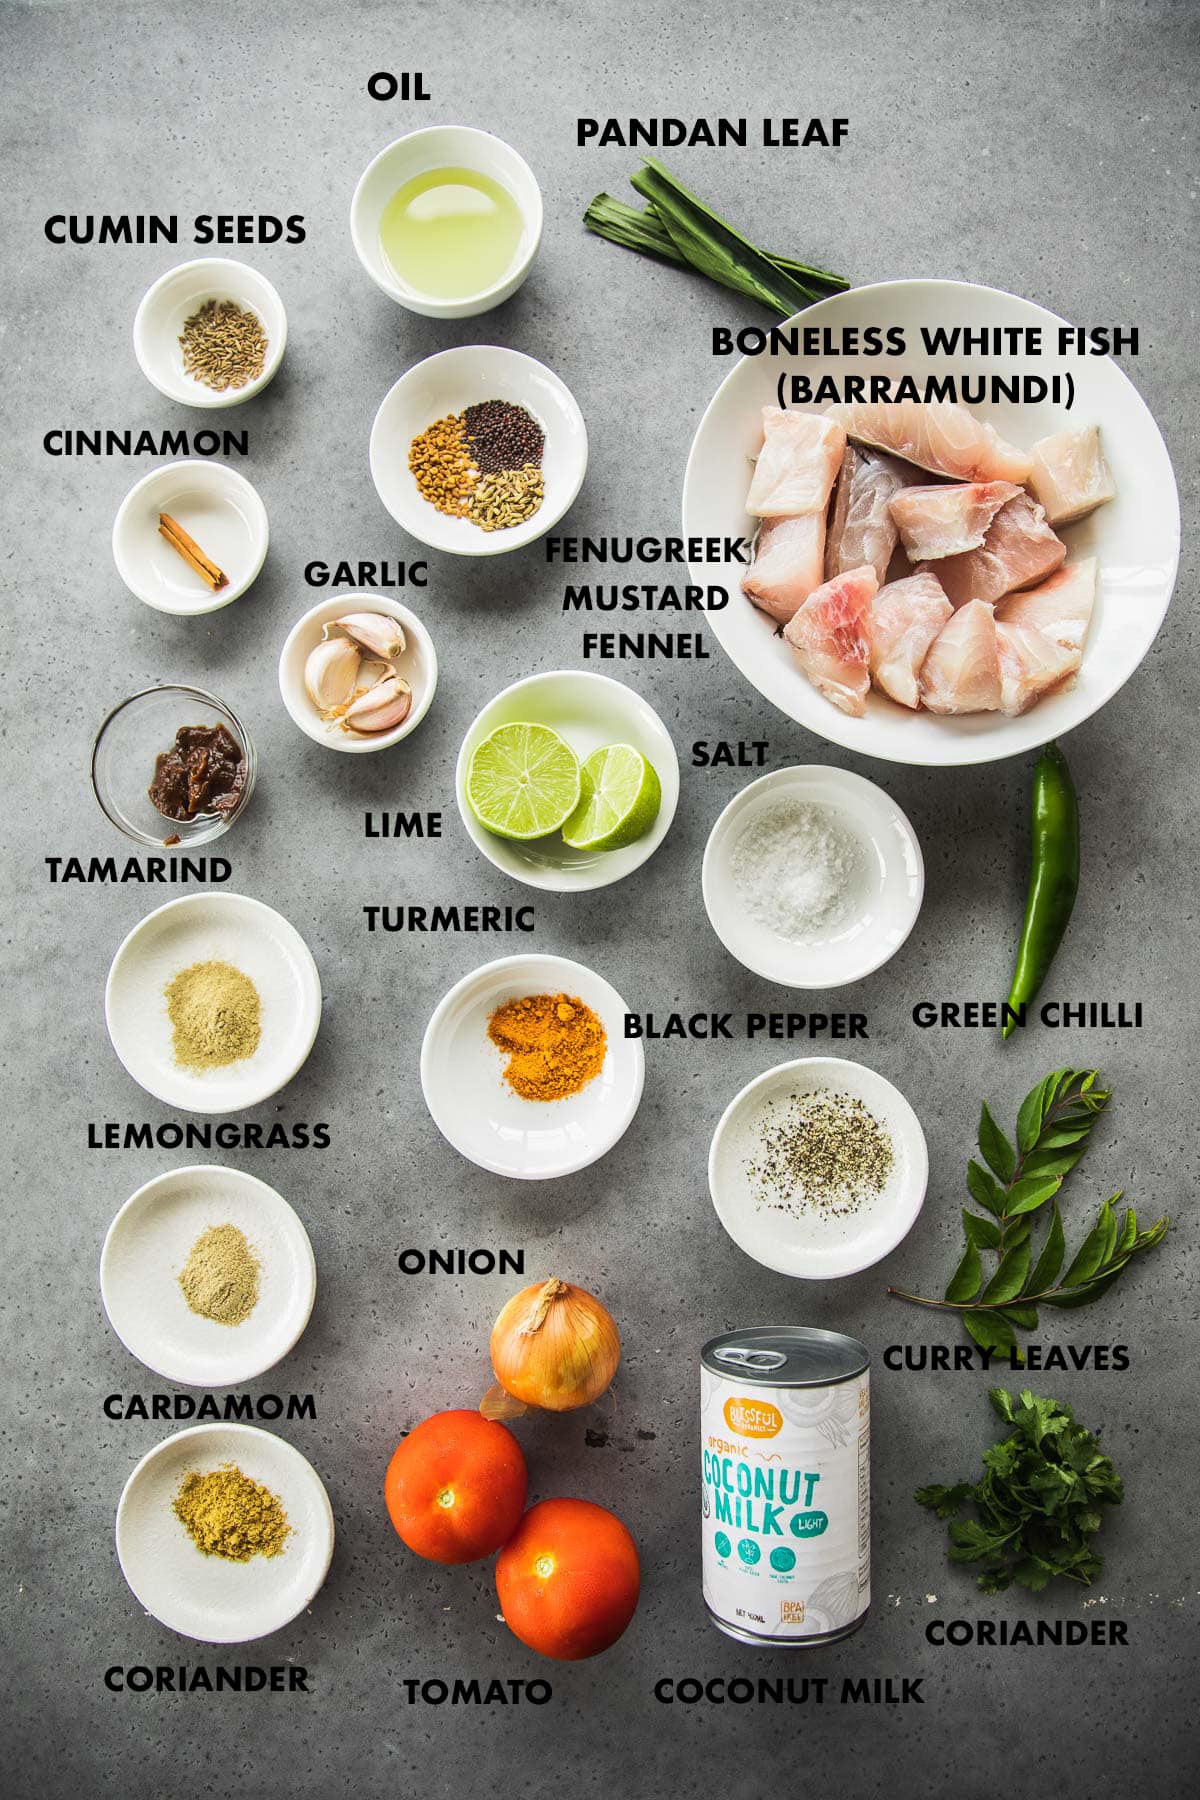 Sri Lankan Fish Curry ingredients measured and labeled - Barramundi fish, onion, tomato, garlic, curry leaves, chilli, coconut milk, tamarind, pandan, black pepper, cardamom, cumin, coriander, fennel, mustard, fenugreek, turmeric, cinnamon, pandan, lemongrass and lime.